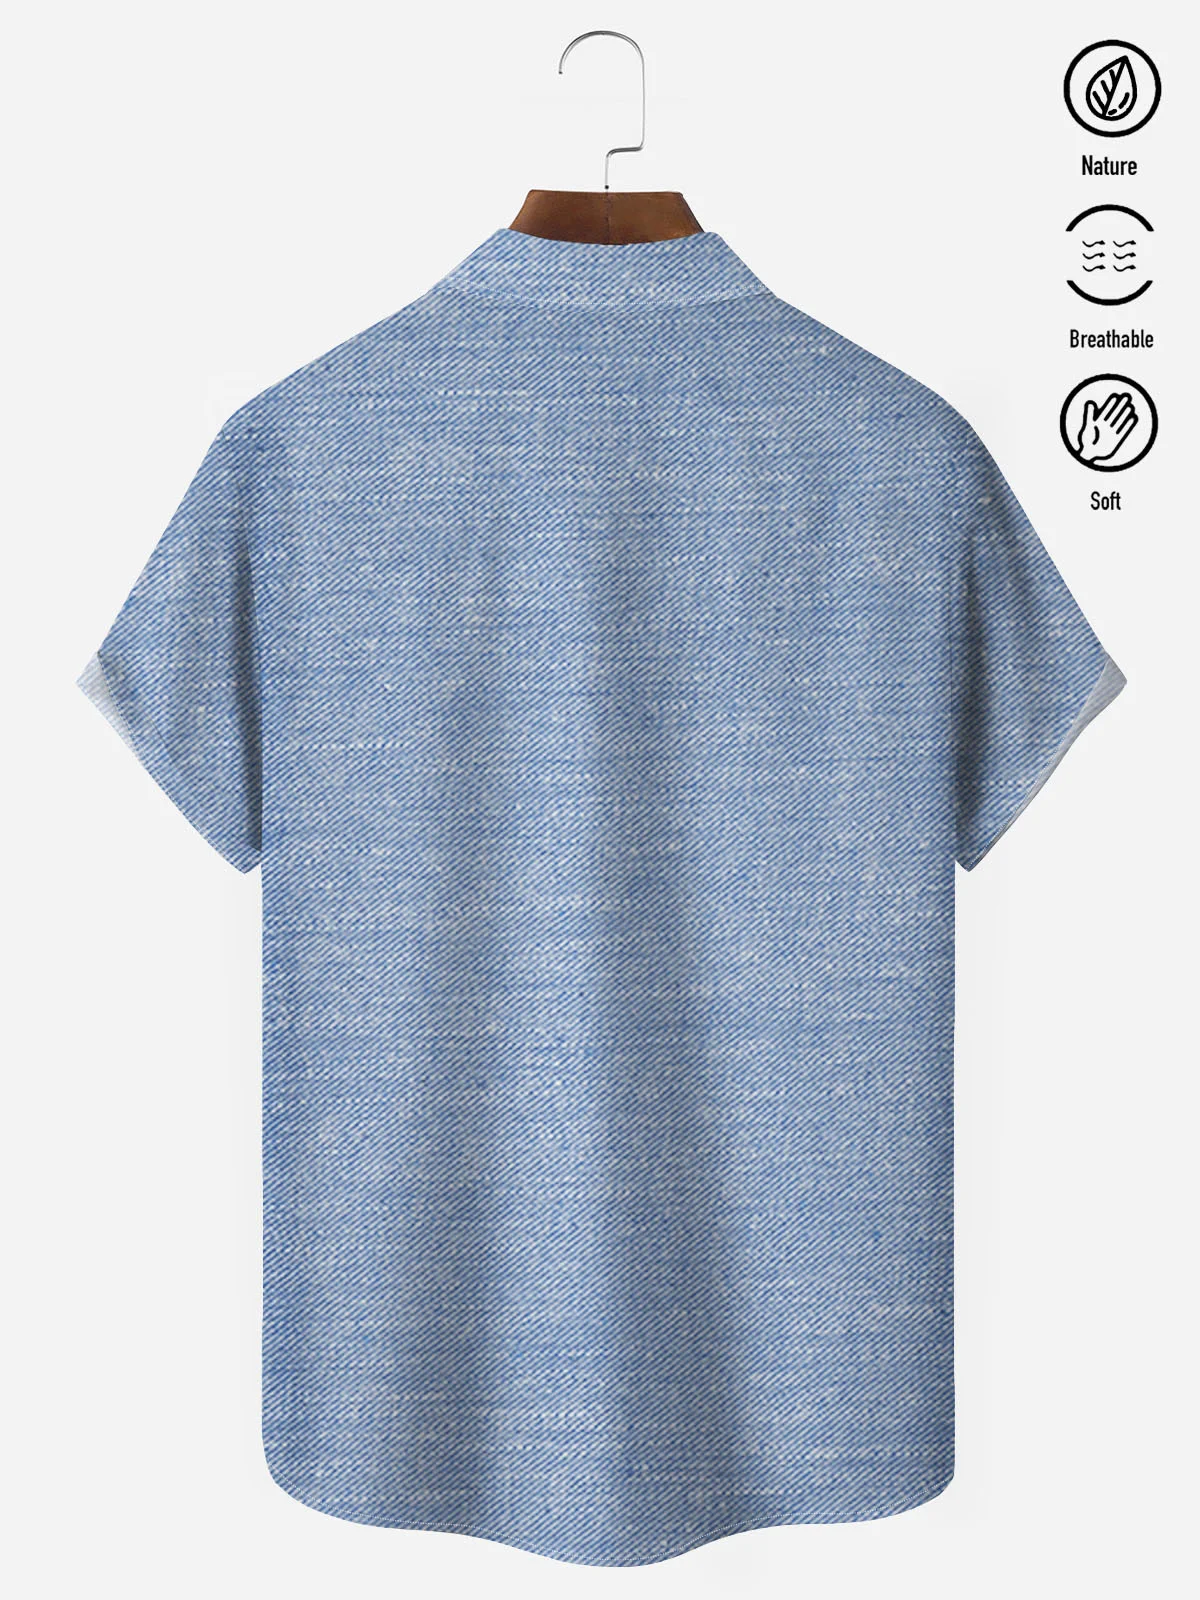 Royaura Holiday Vintage Textured Print Blue Men's Casual Shirts Stretch Aloha Camp Pocket Shirts